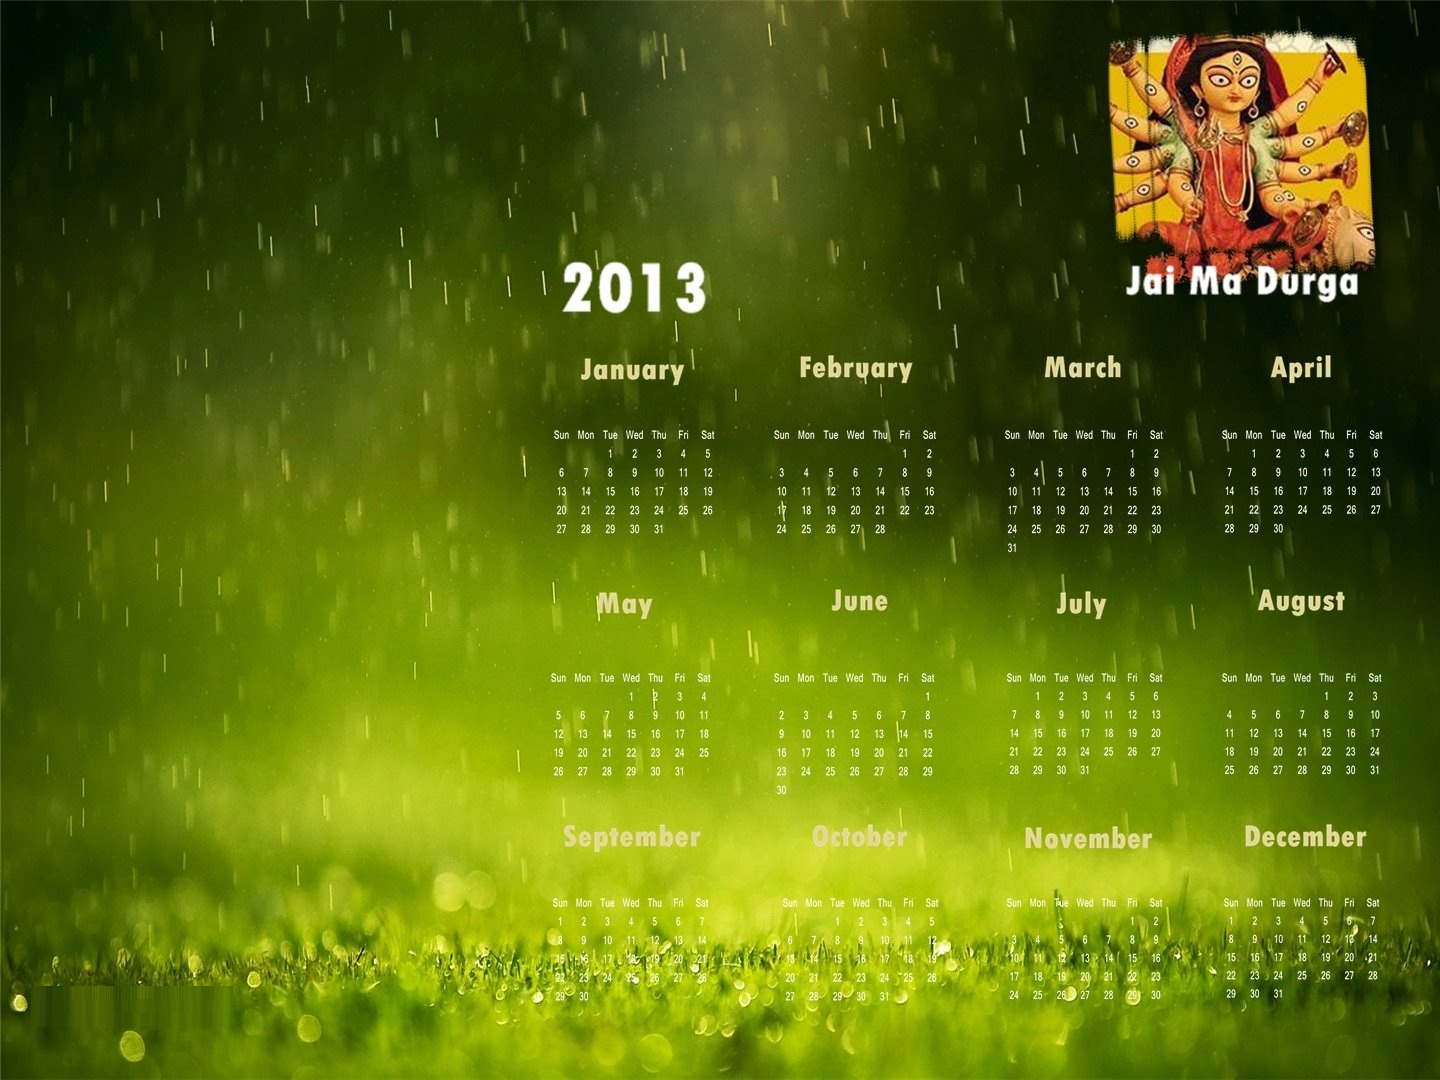 walgreens photo desktop calendar